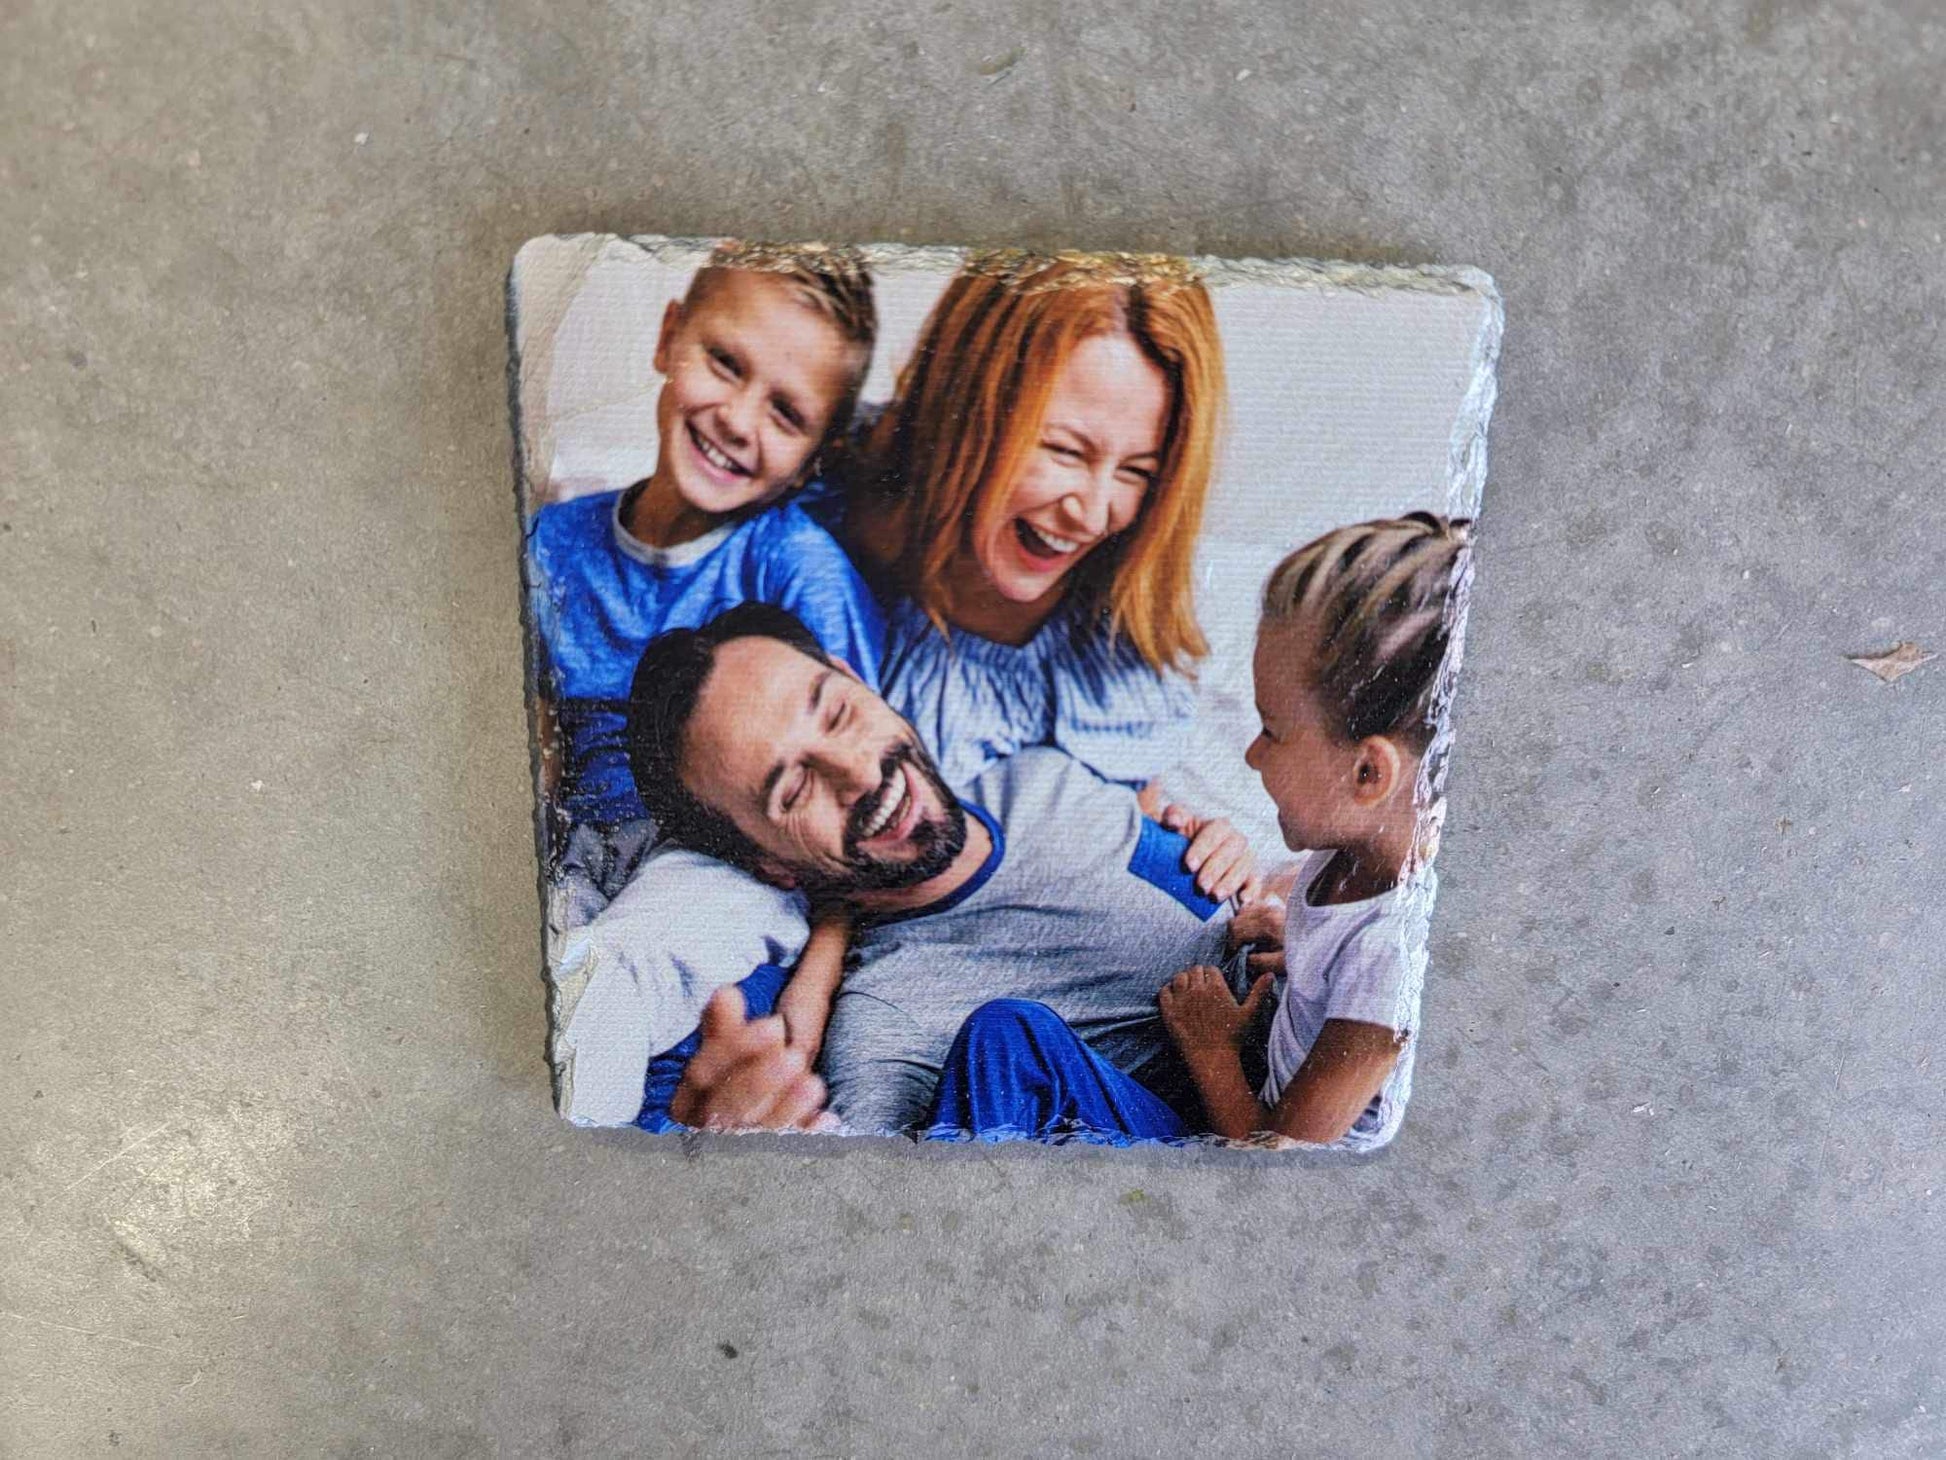 Custom Sign Printed Family Photo Slate Coasters Set of 4 Keepsake Gift Gift for her Wedding Gift Christmas Birthday Your Image Color